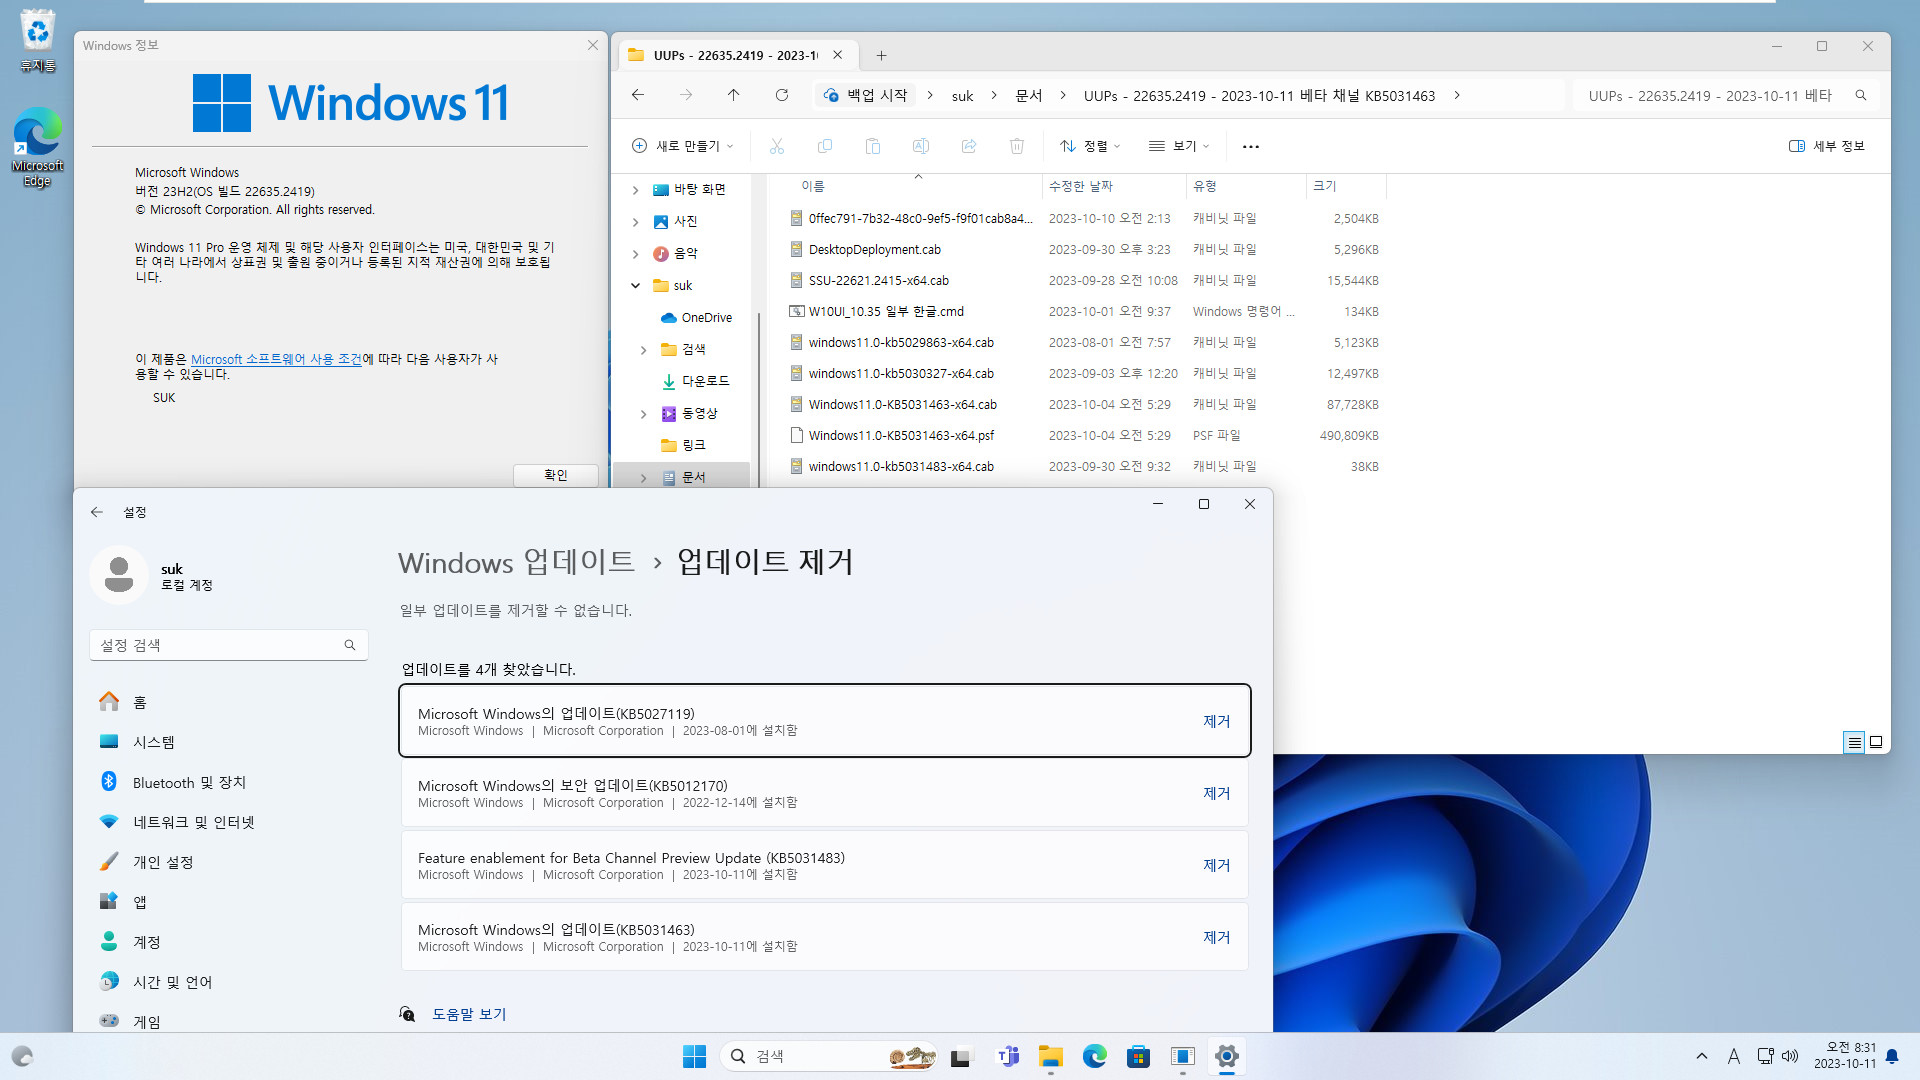 Windows 11 최초의 22635 빌드 (22635.2419) 설치 여부 테스트 - 버전 22H2, 22621.2283 빌드에서 - UUP 업데이트 파일들 사용 - 설치 성공 2023-10-11_083136.jpg